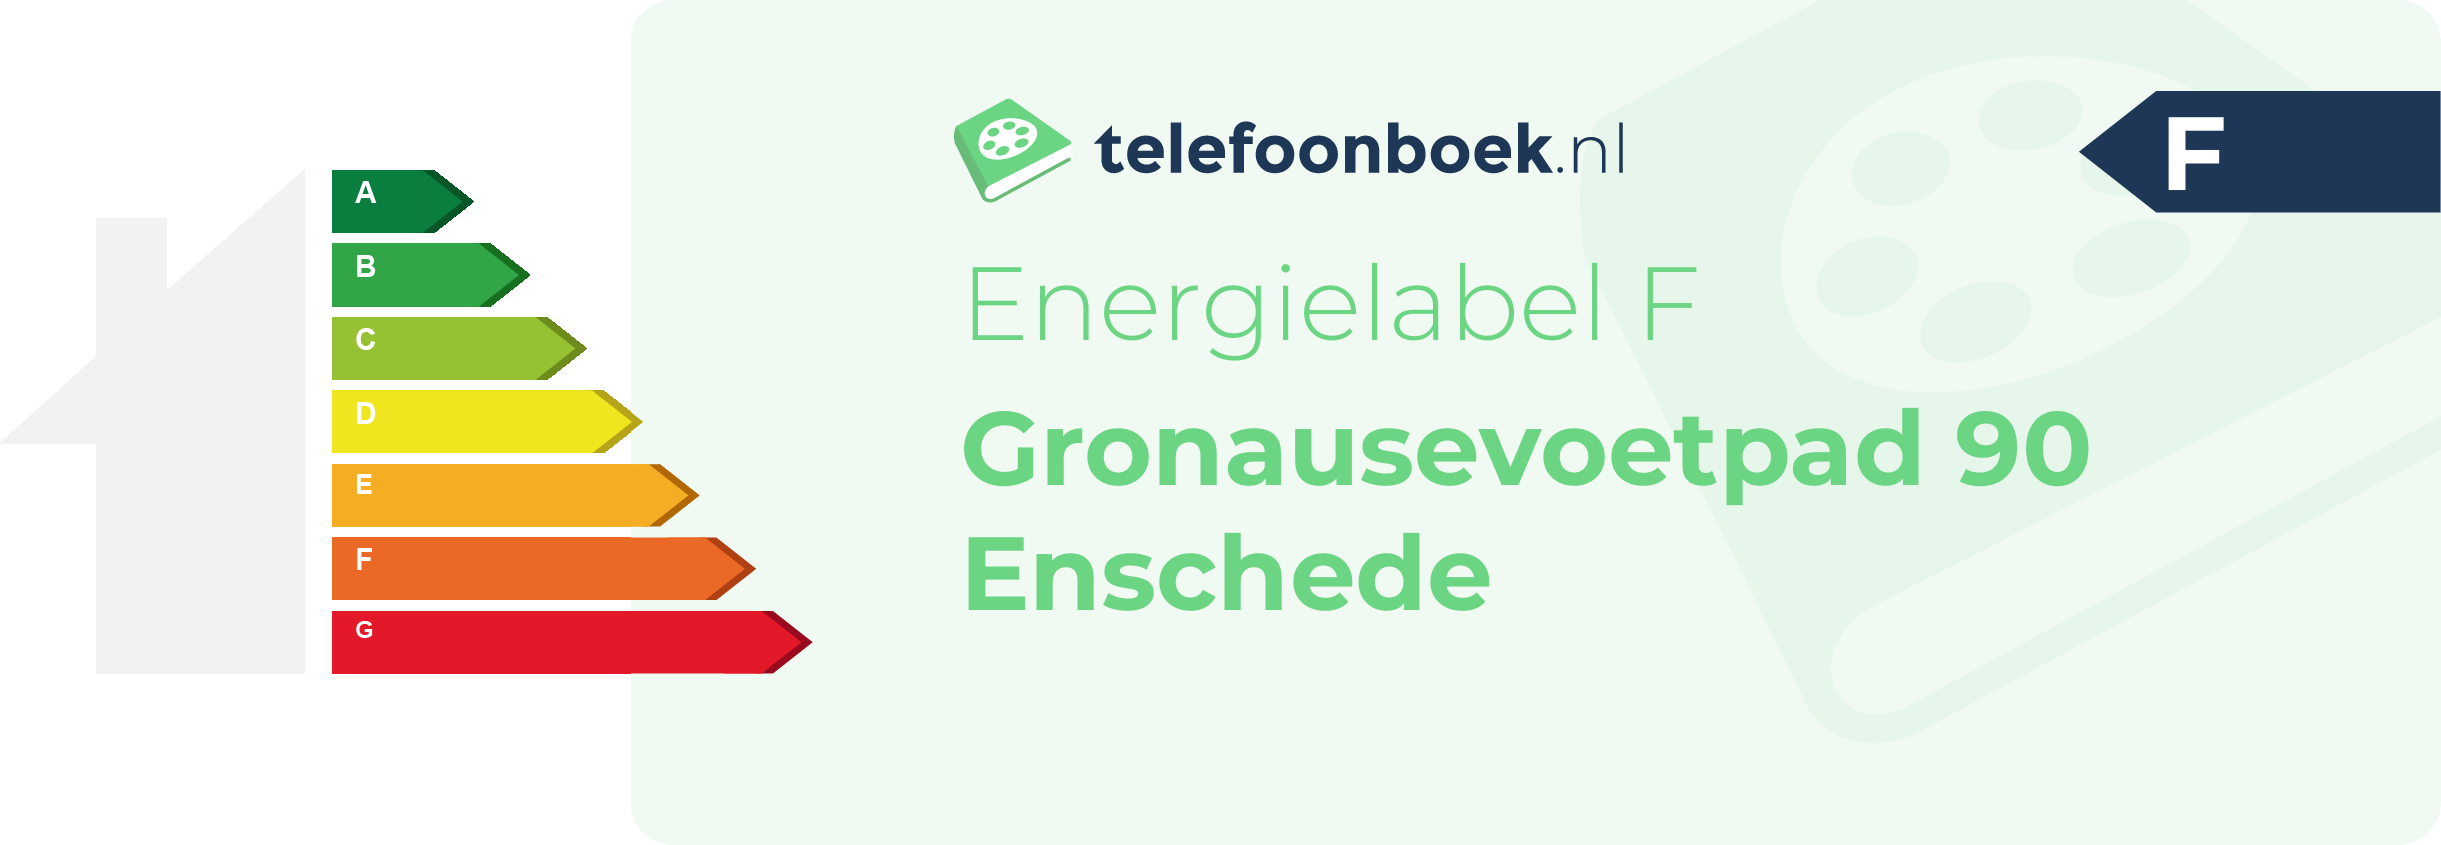 Energielabel Gronausevoetpad 90 Enschede